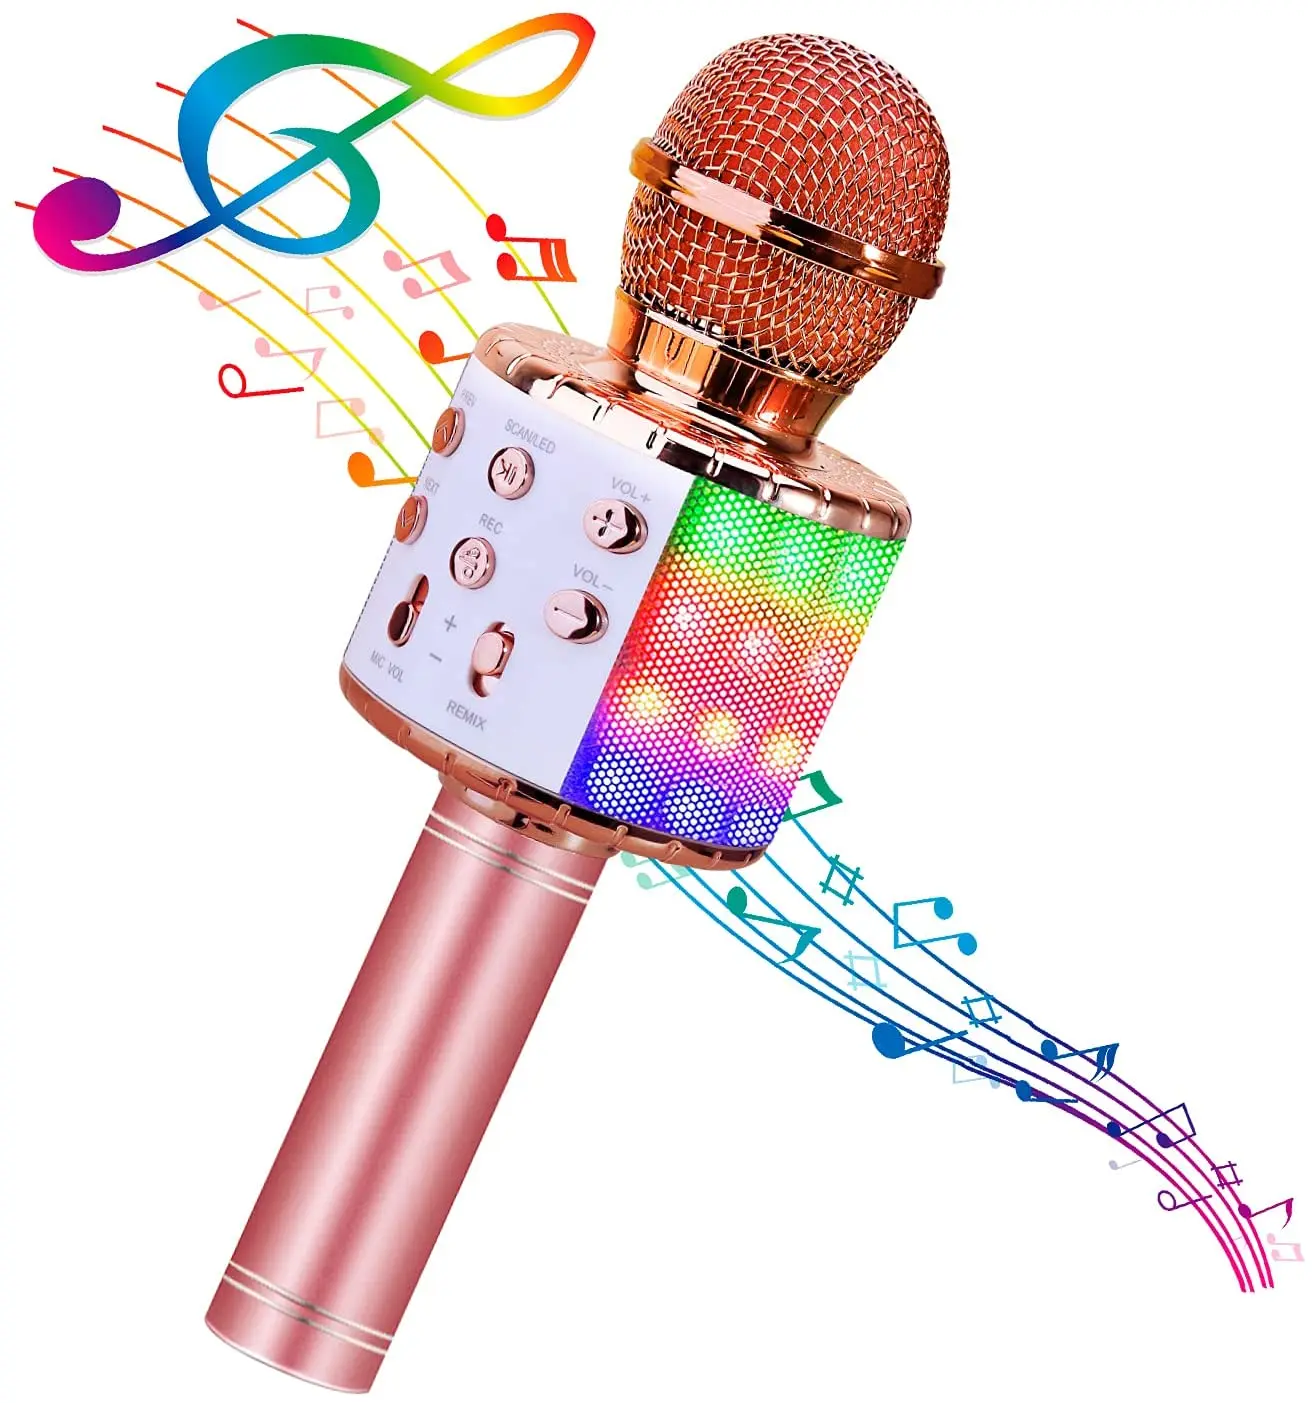 

Wireless Kids Karaoke Microphone With Speaker Portable Handheld Karaoke Player For Home Party Ktv Music Singing Playing